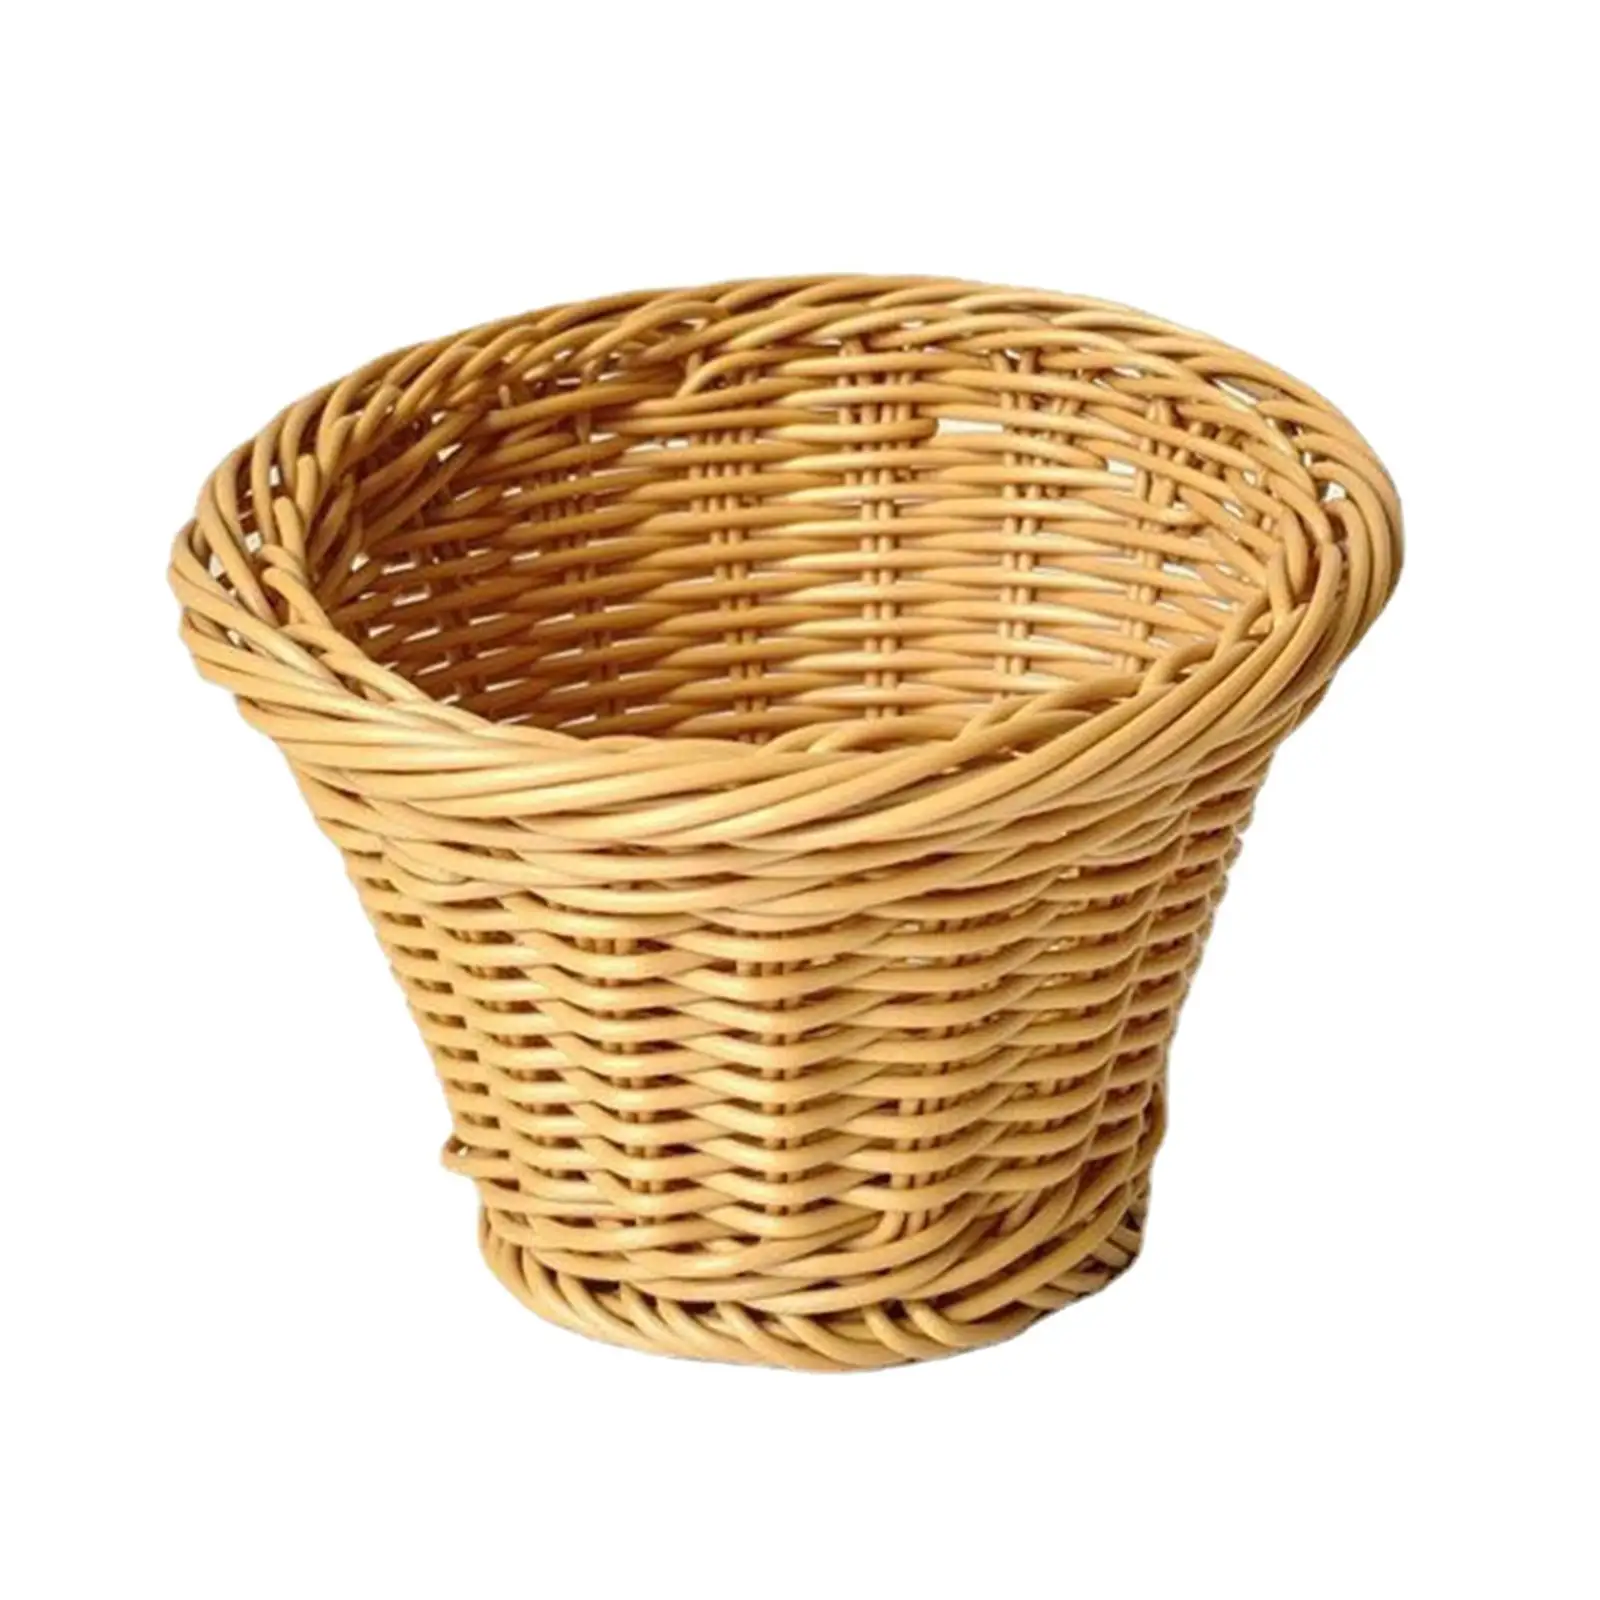 Imitation Rattan Basket Hand Woven Snack Basket Serving Basket for Kitchen Accessories